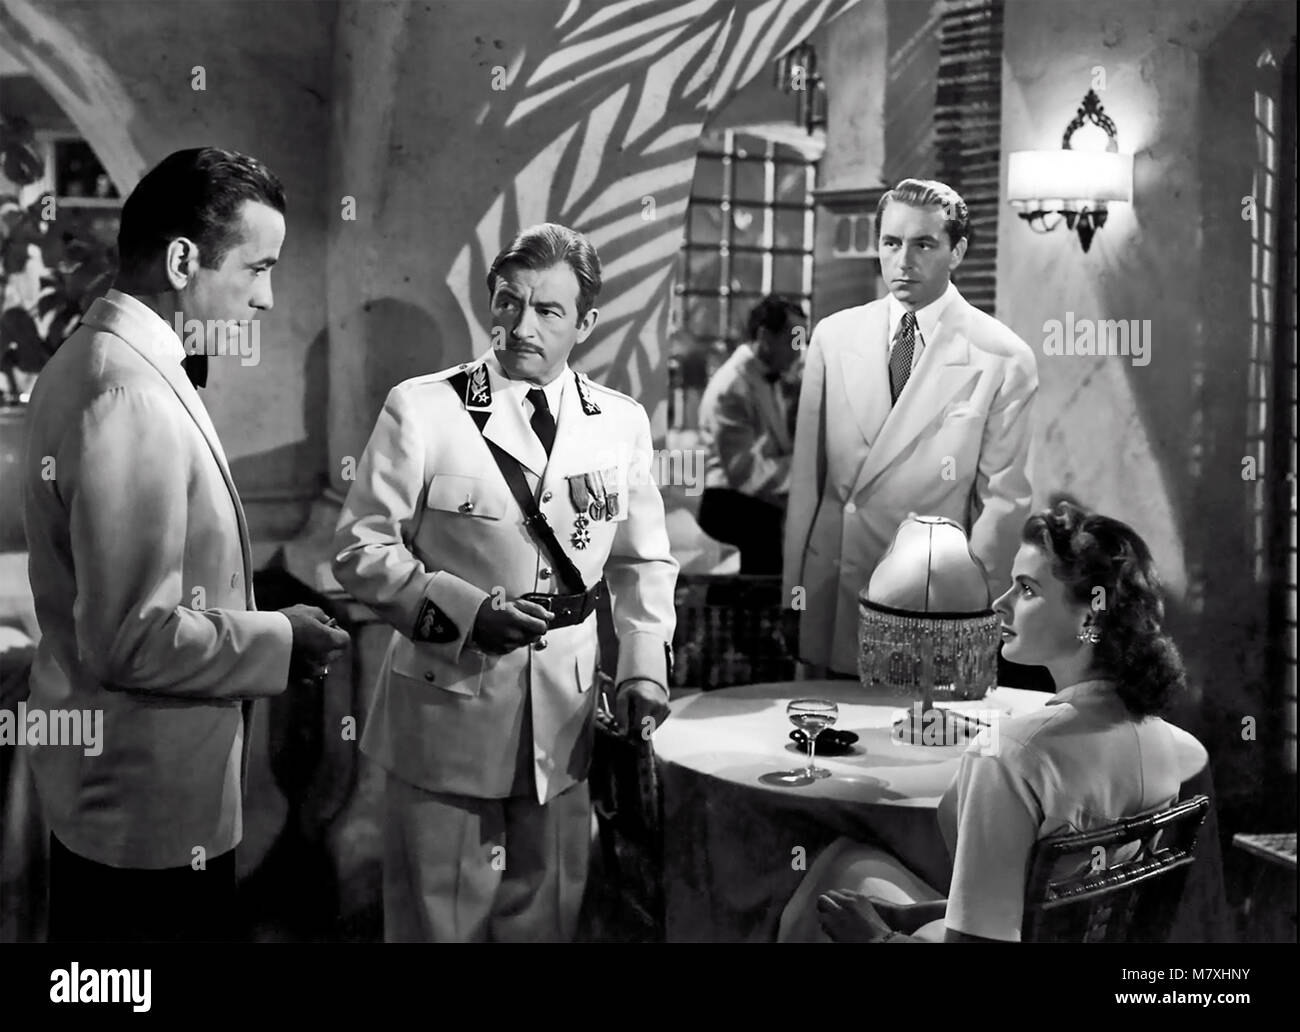 CASABLANCA 1942 Warner Bros film con da sinistra: Humphrey Bogart, clausola piogge, Paolo Henreidf, Ingrid Bergman. Foto Stock